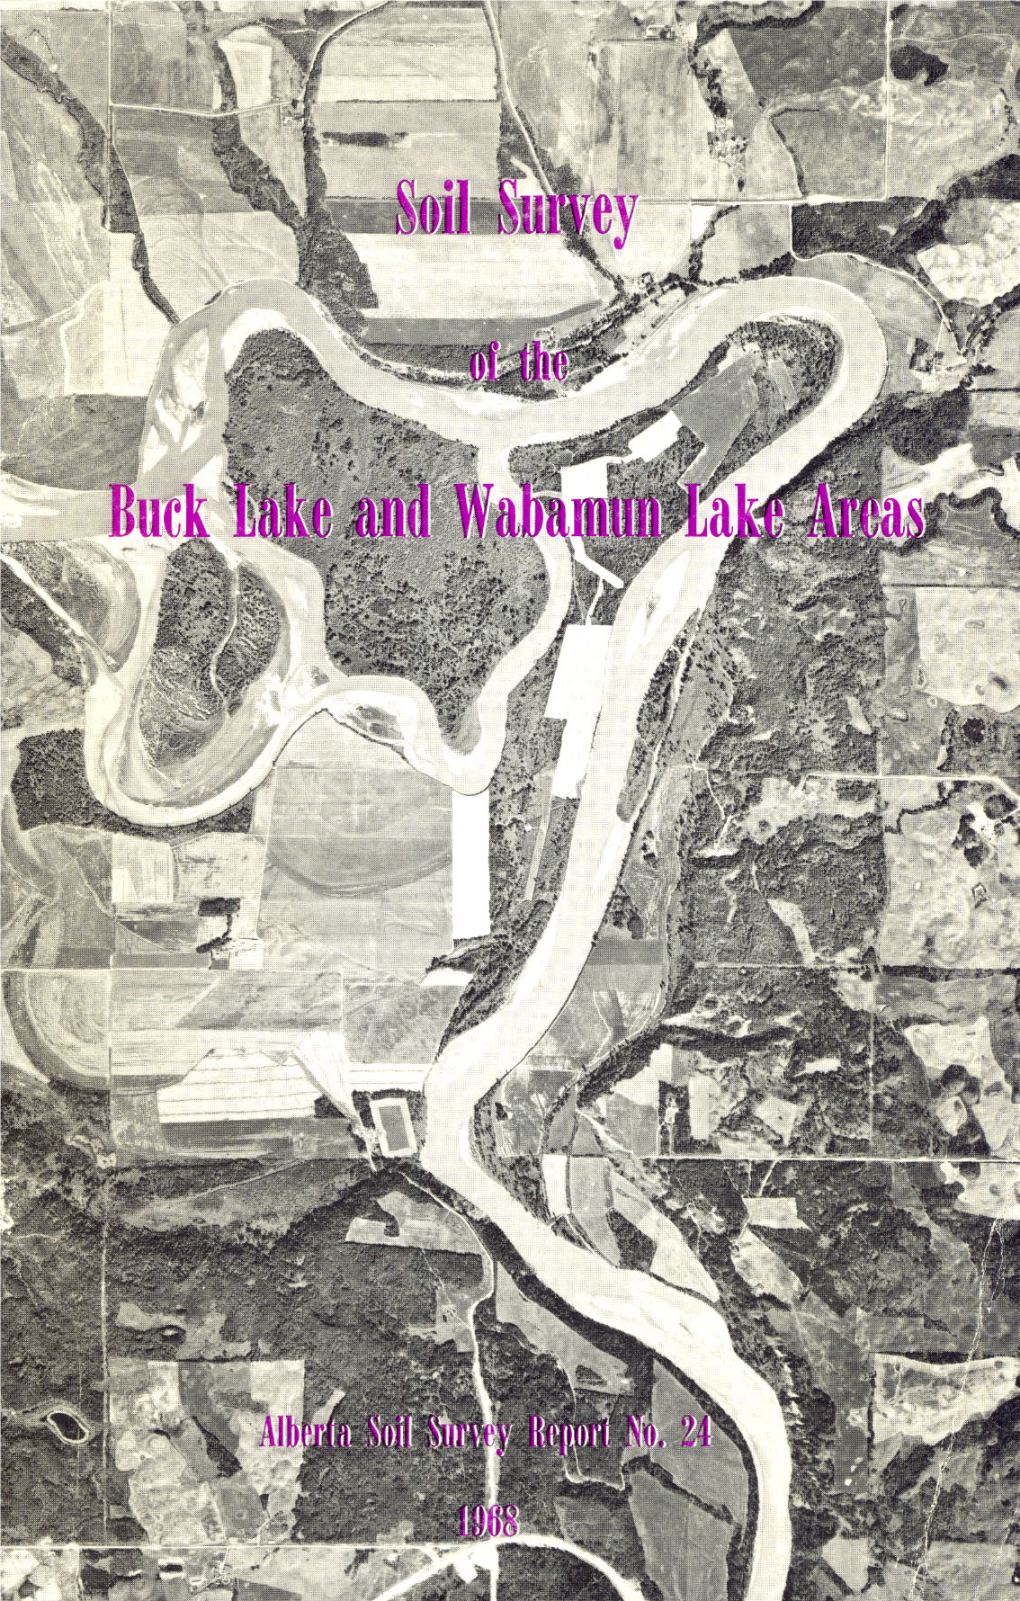 Reconnaissance Soil Survey of the Buck Lake